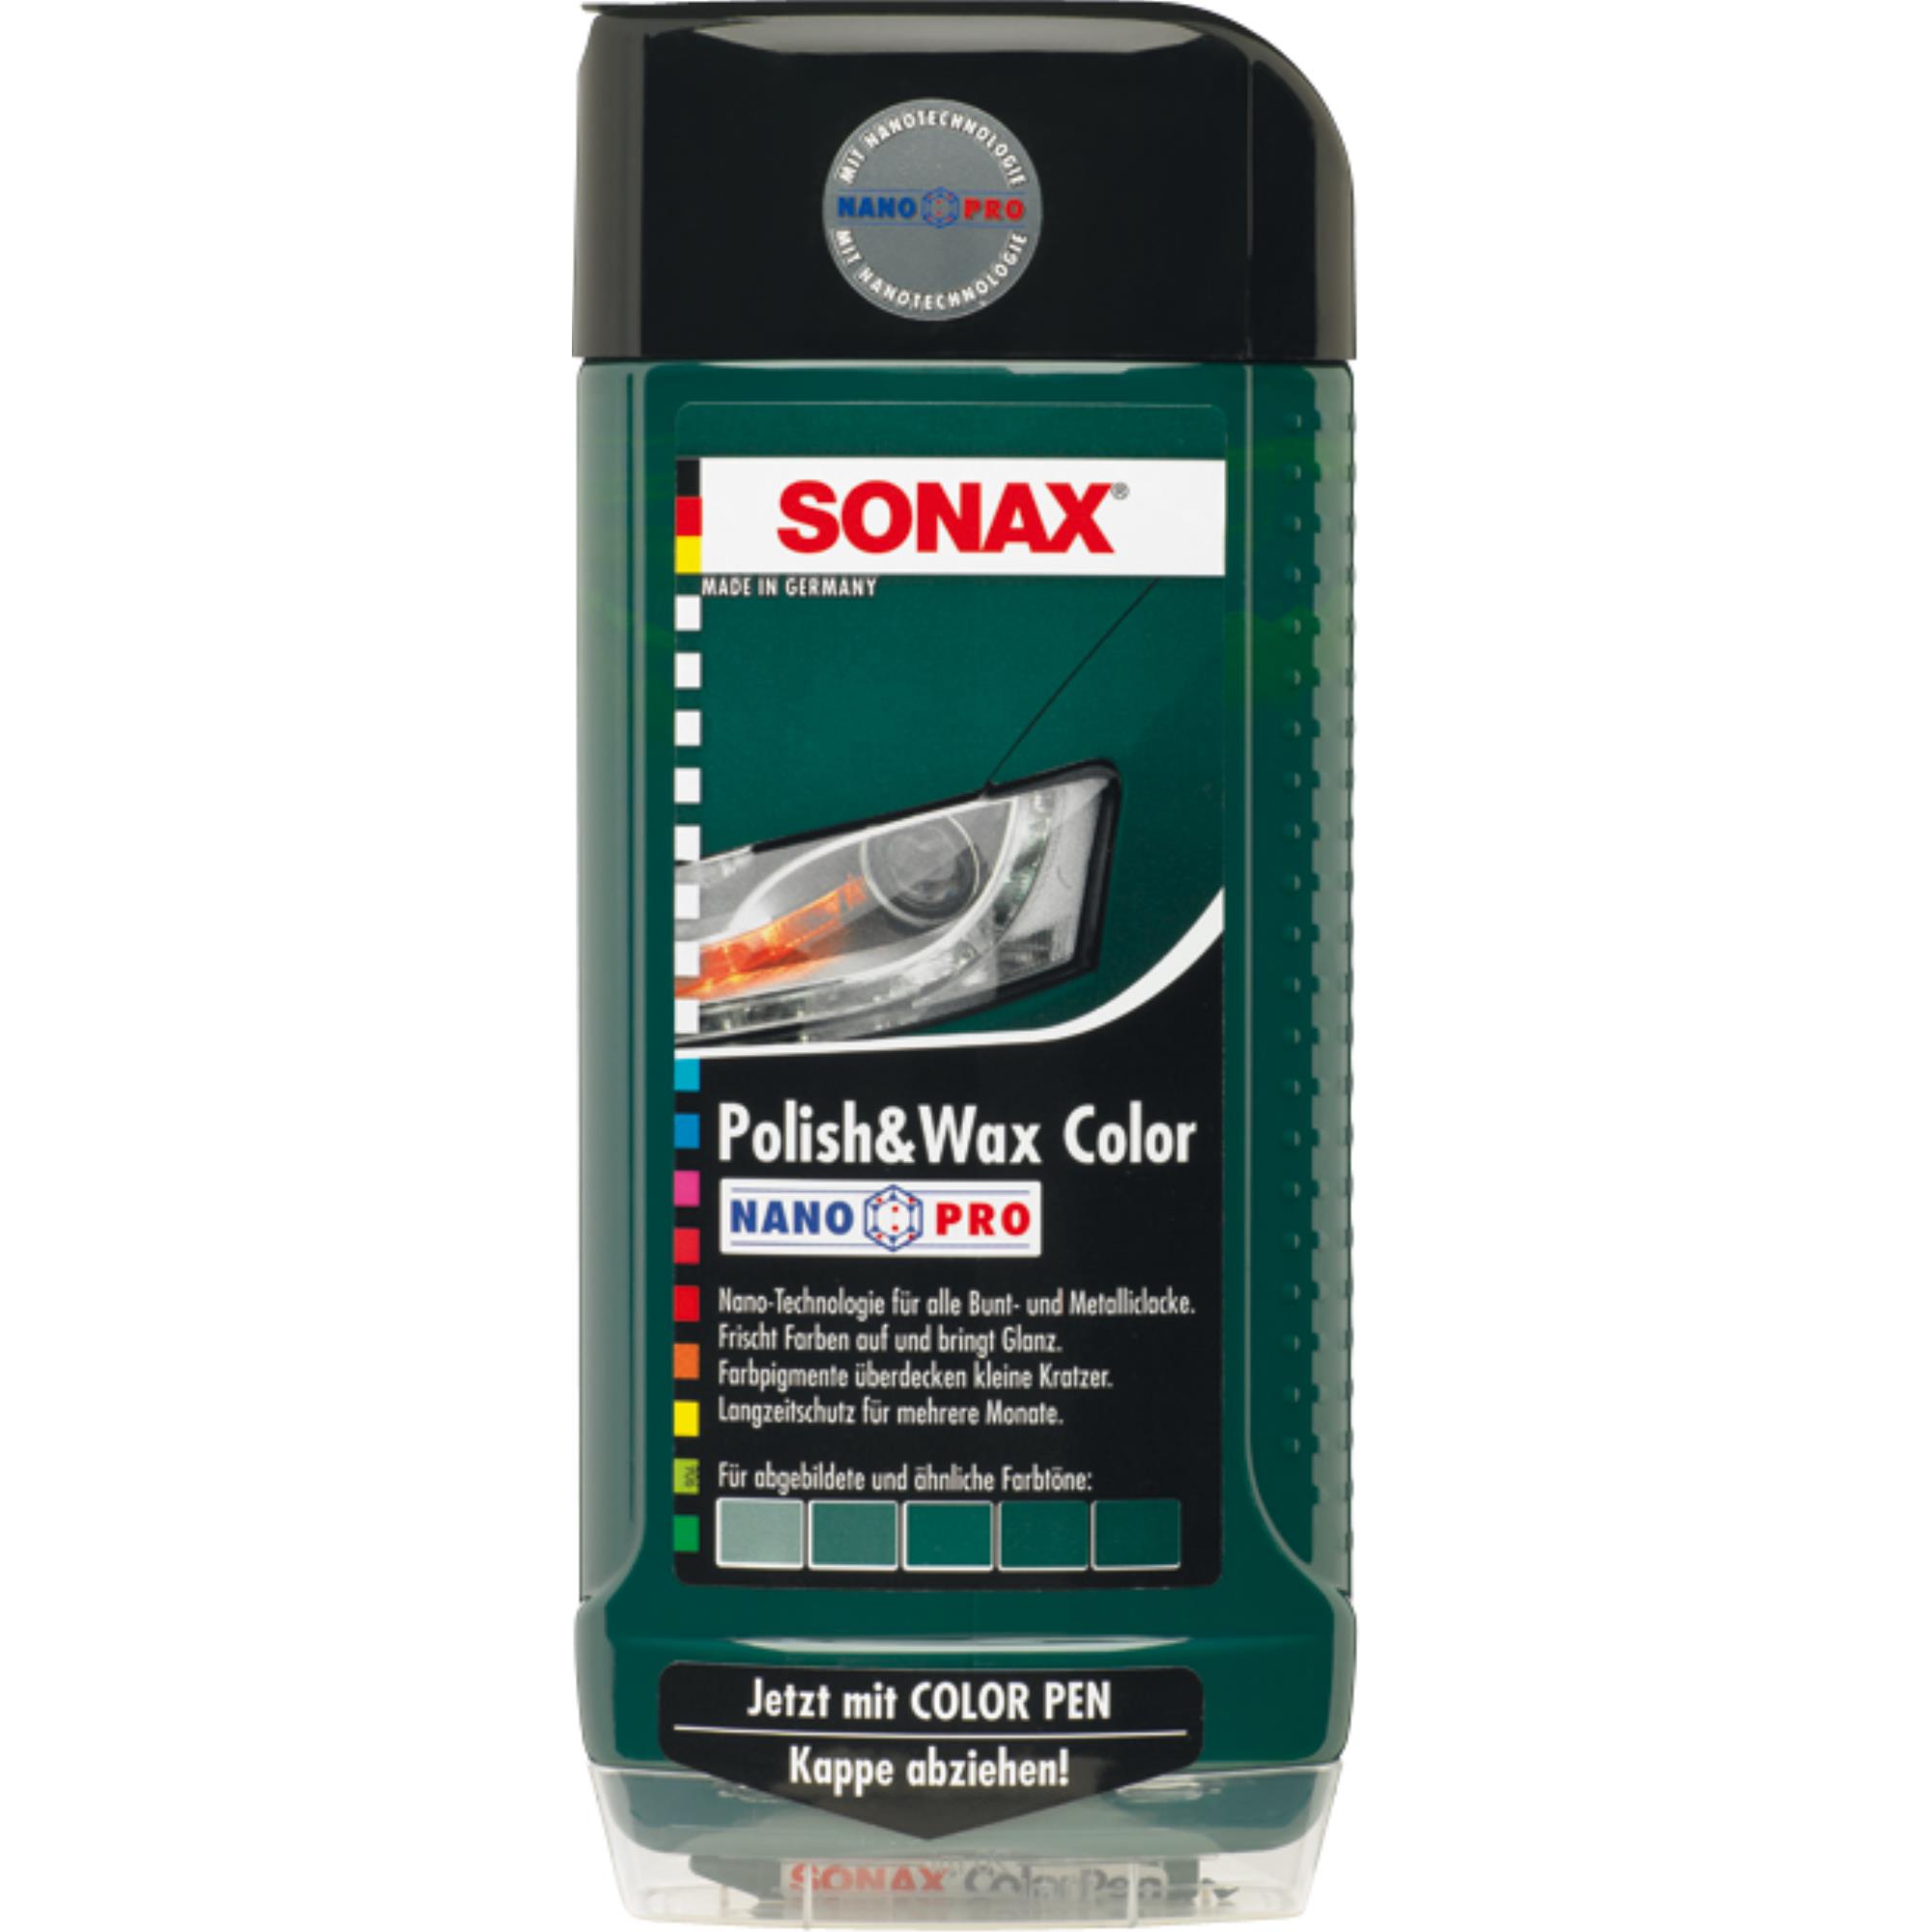 SONAX 02967000 Polish & Wax Color NanoPro grün Politur Wachs 500 ml